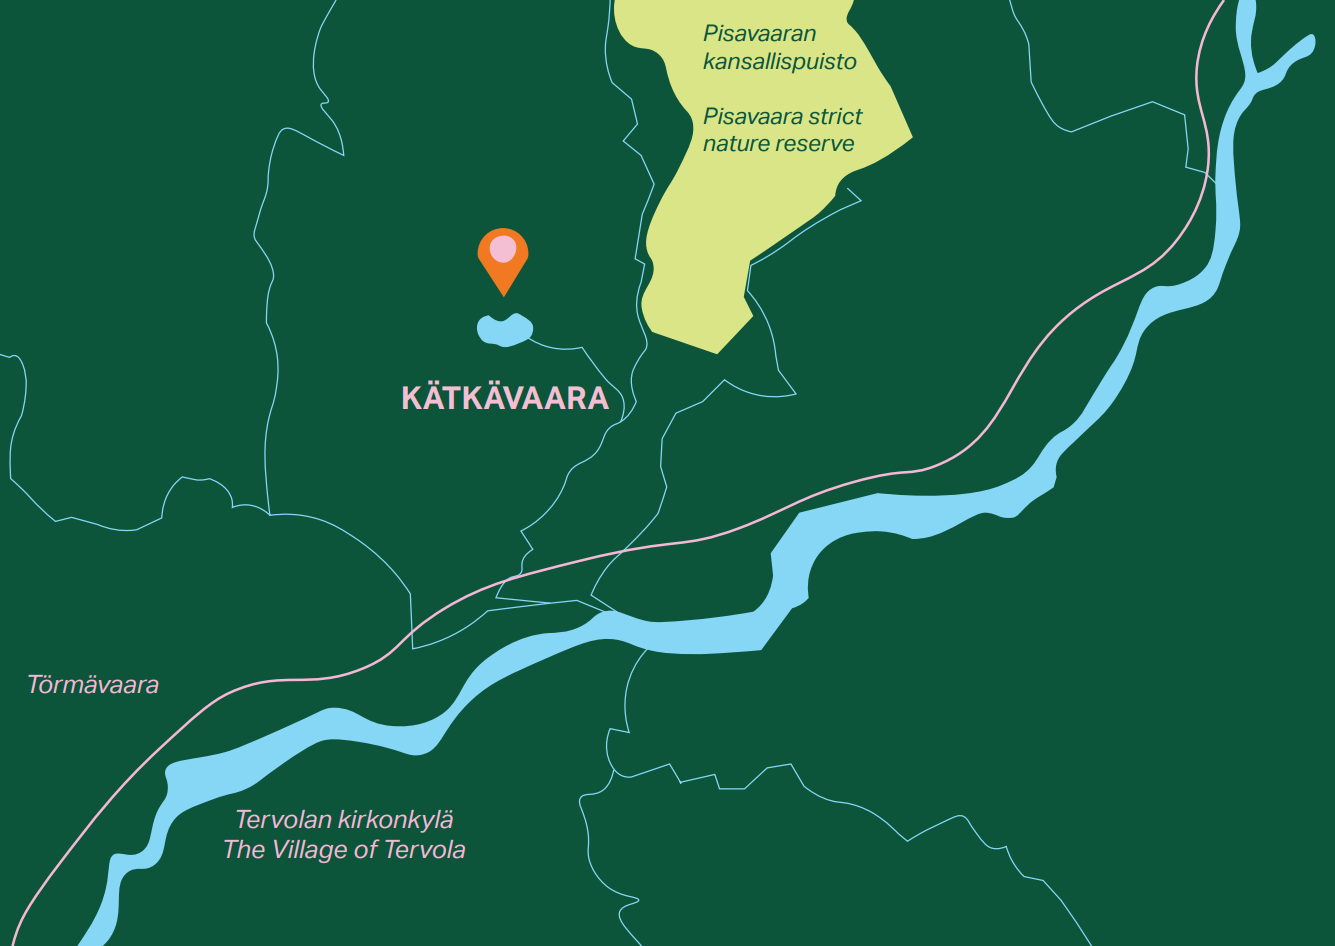 Preview map of katkavaara